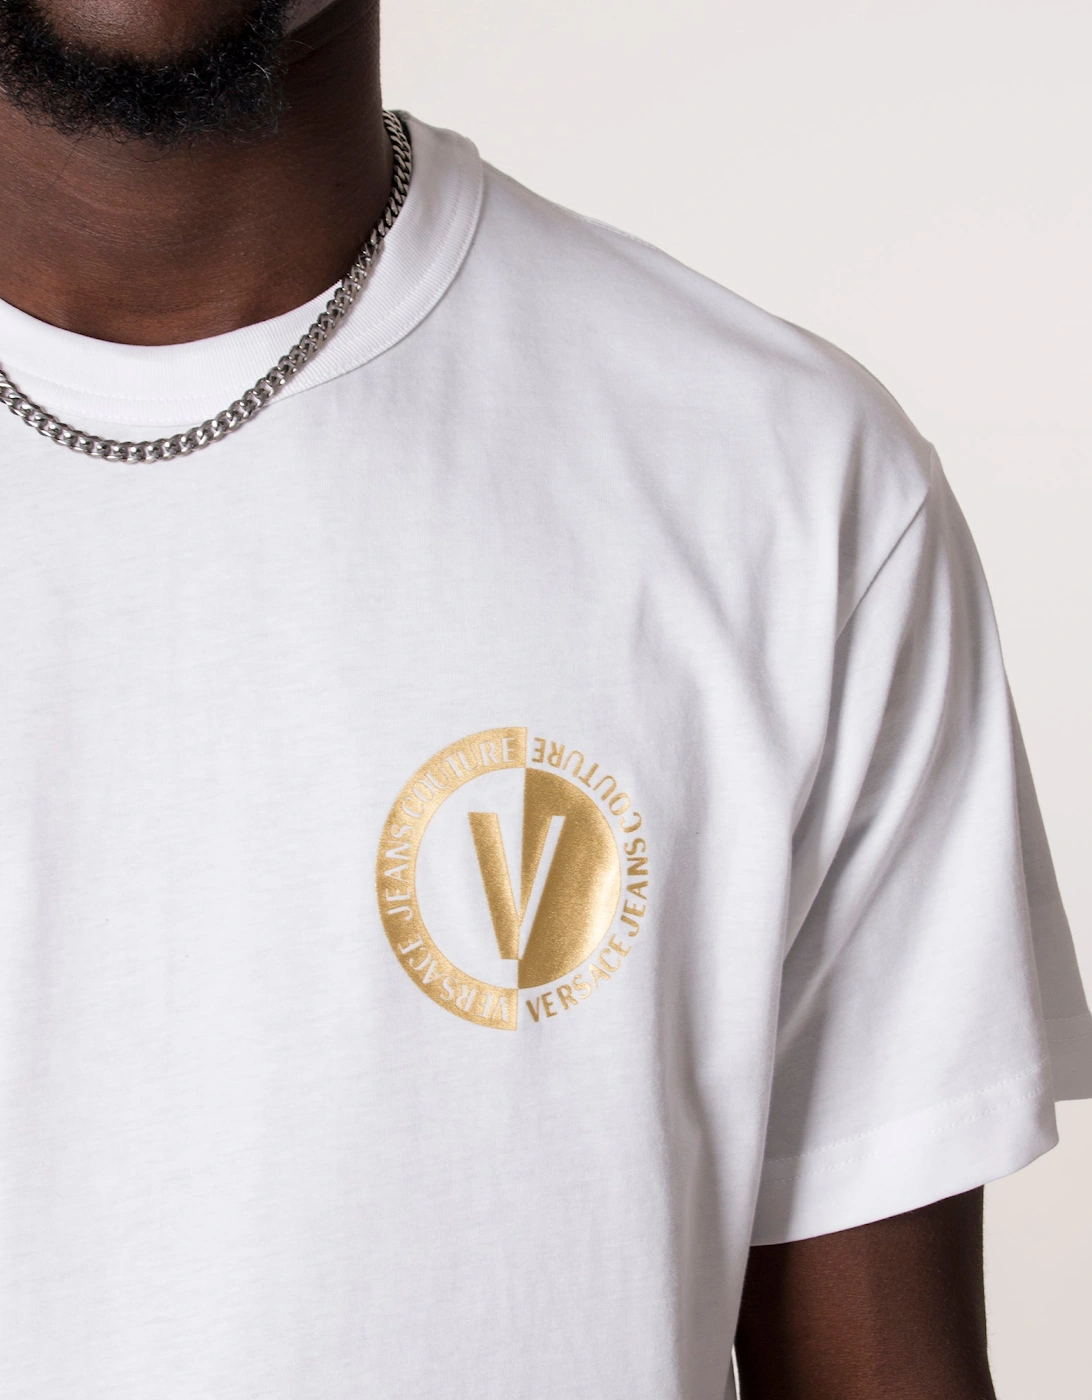 New V Emblem Logo T-Shirt